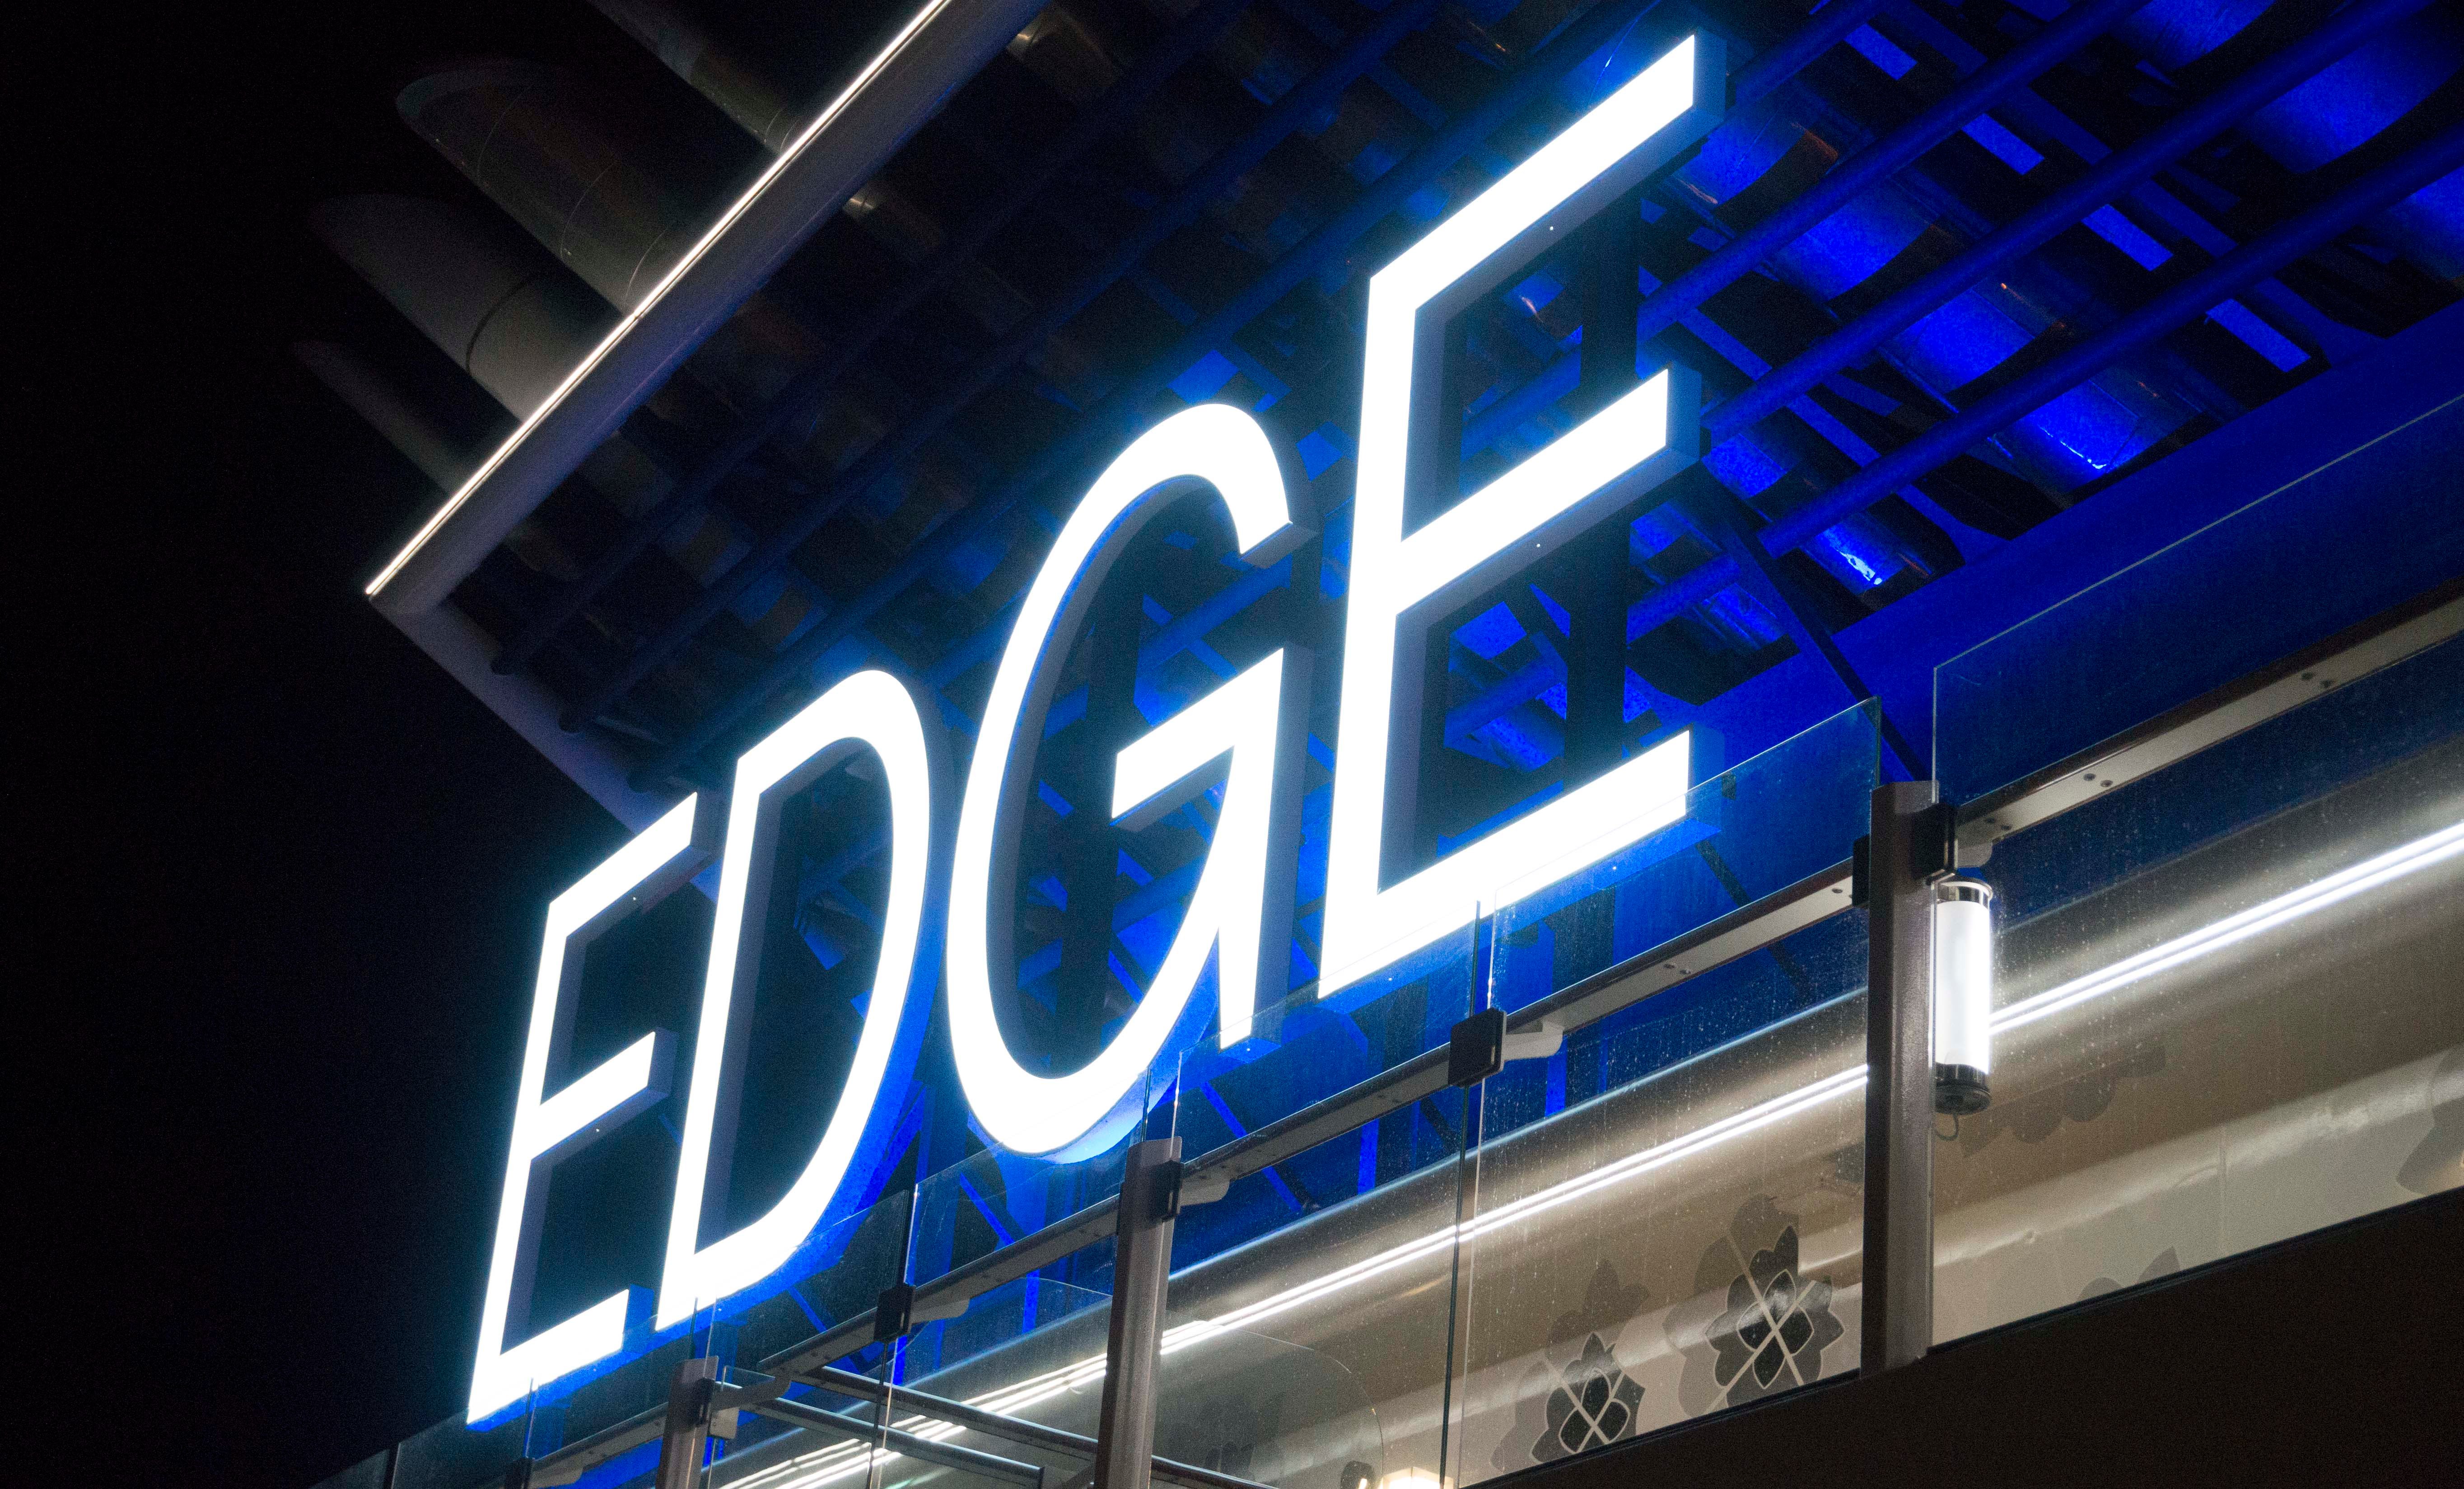 EDGE sign